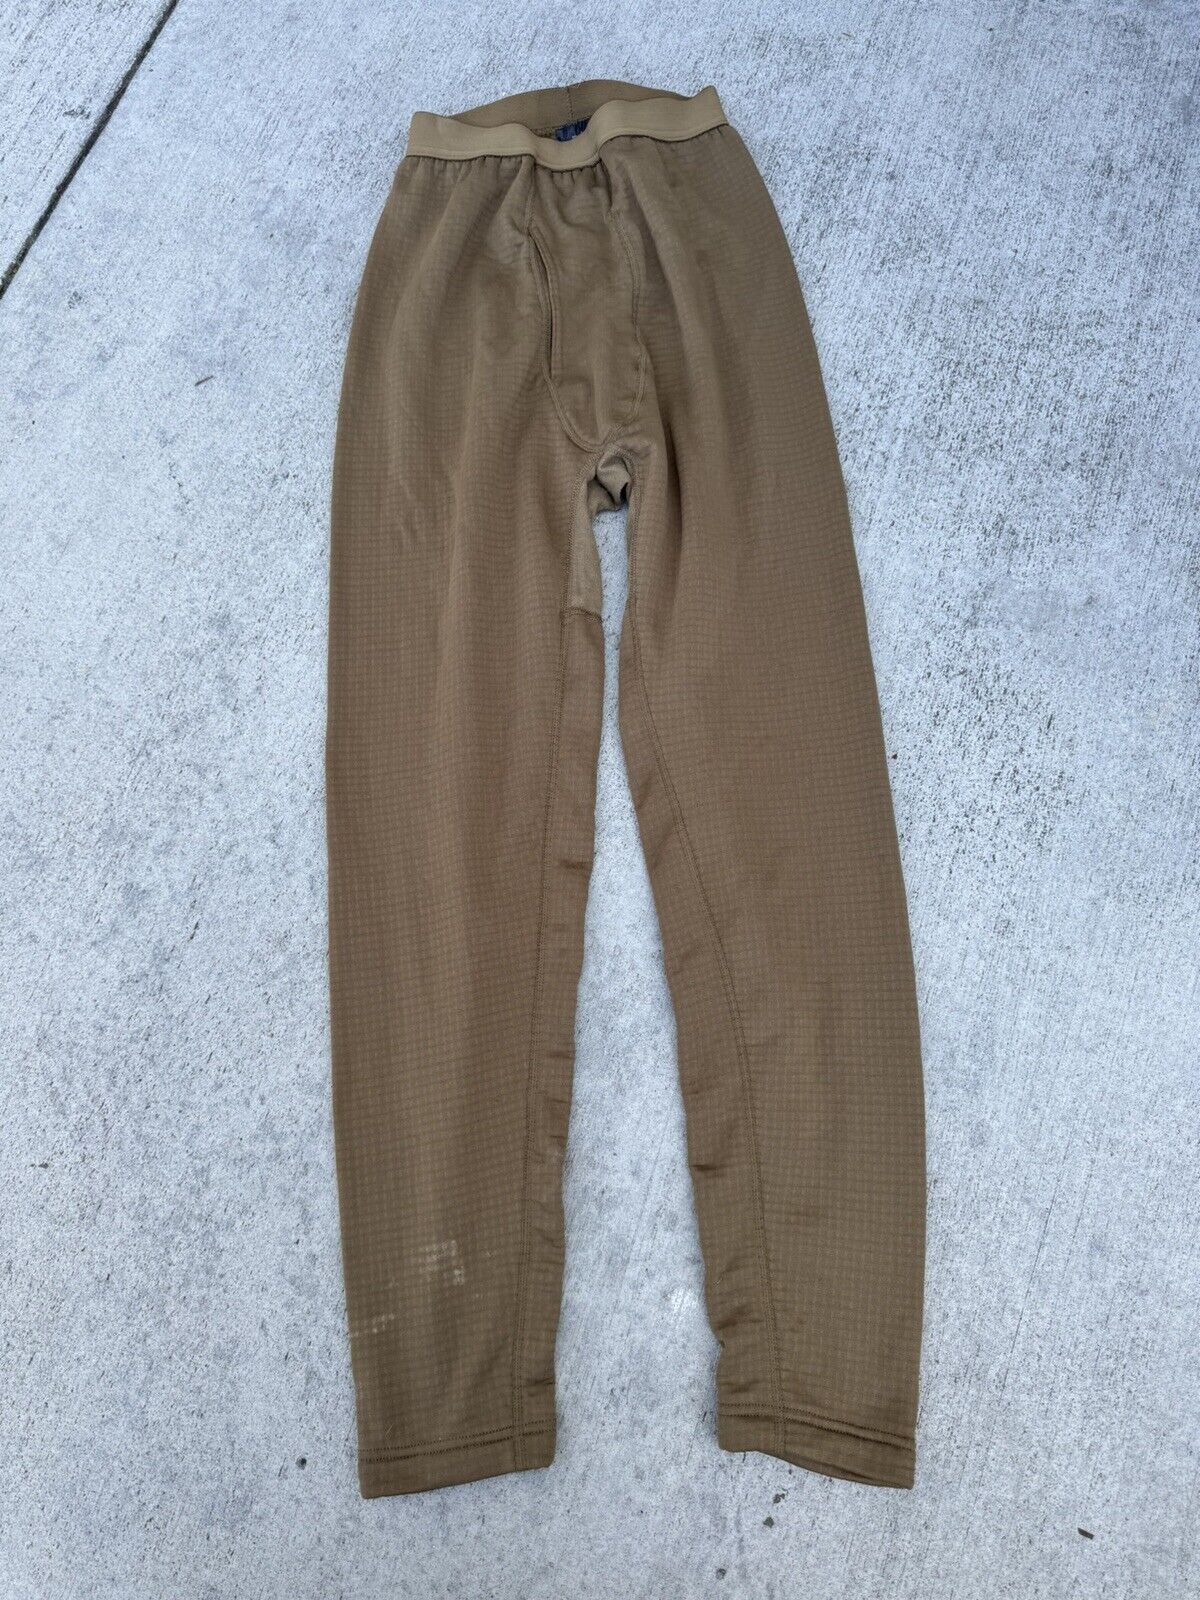 Halys PCU Level 2 Coyote Brown Grid Fleece Pants Medium